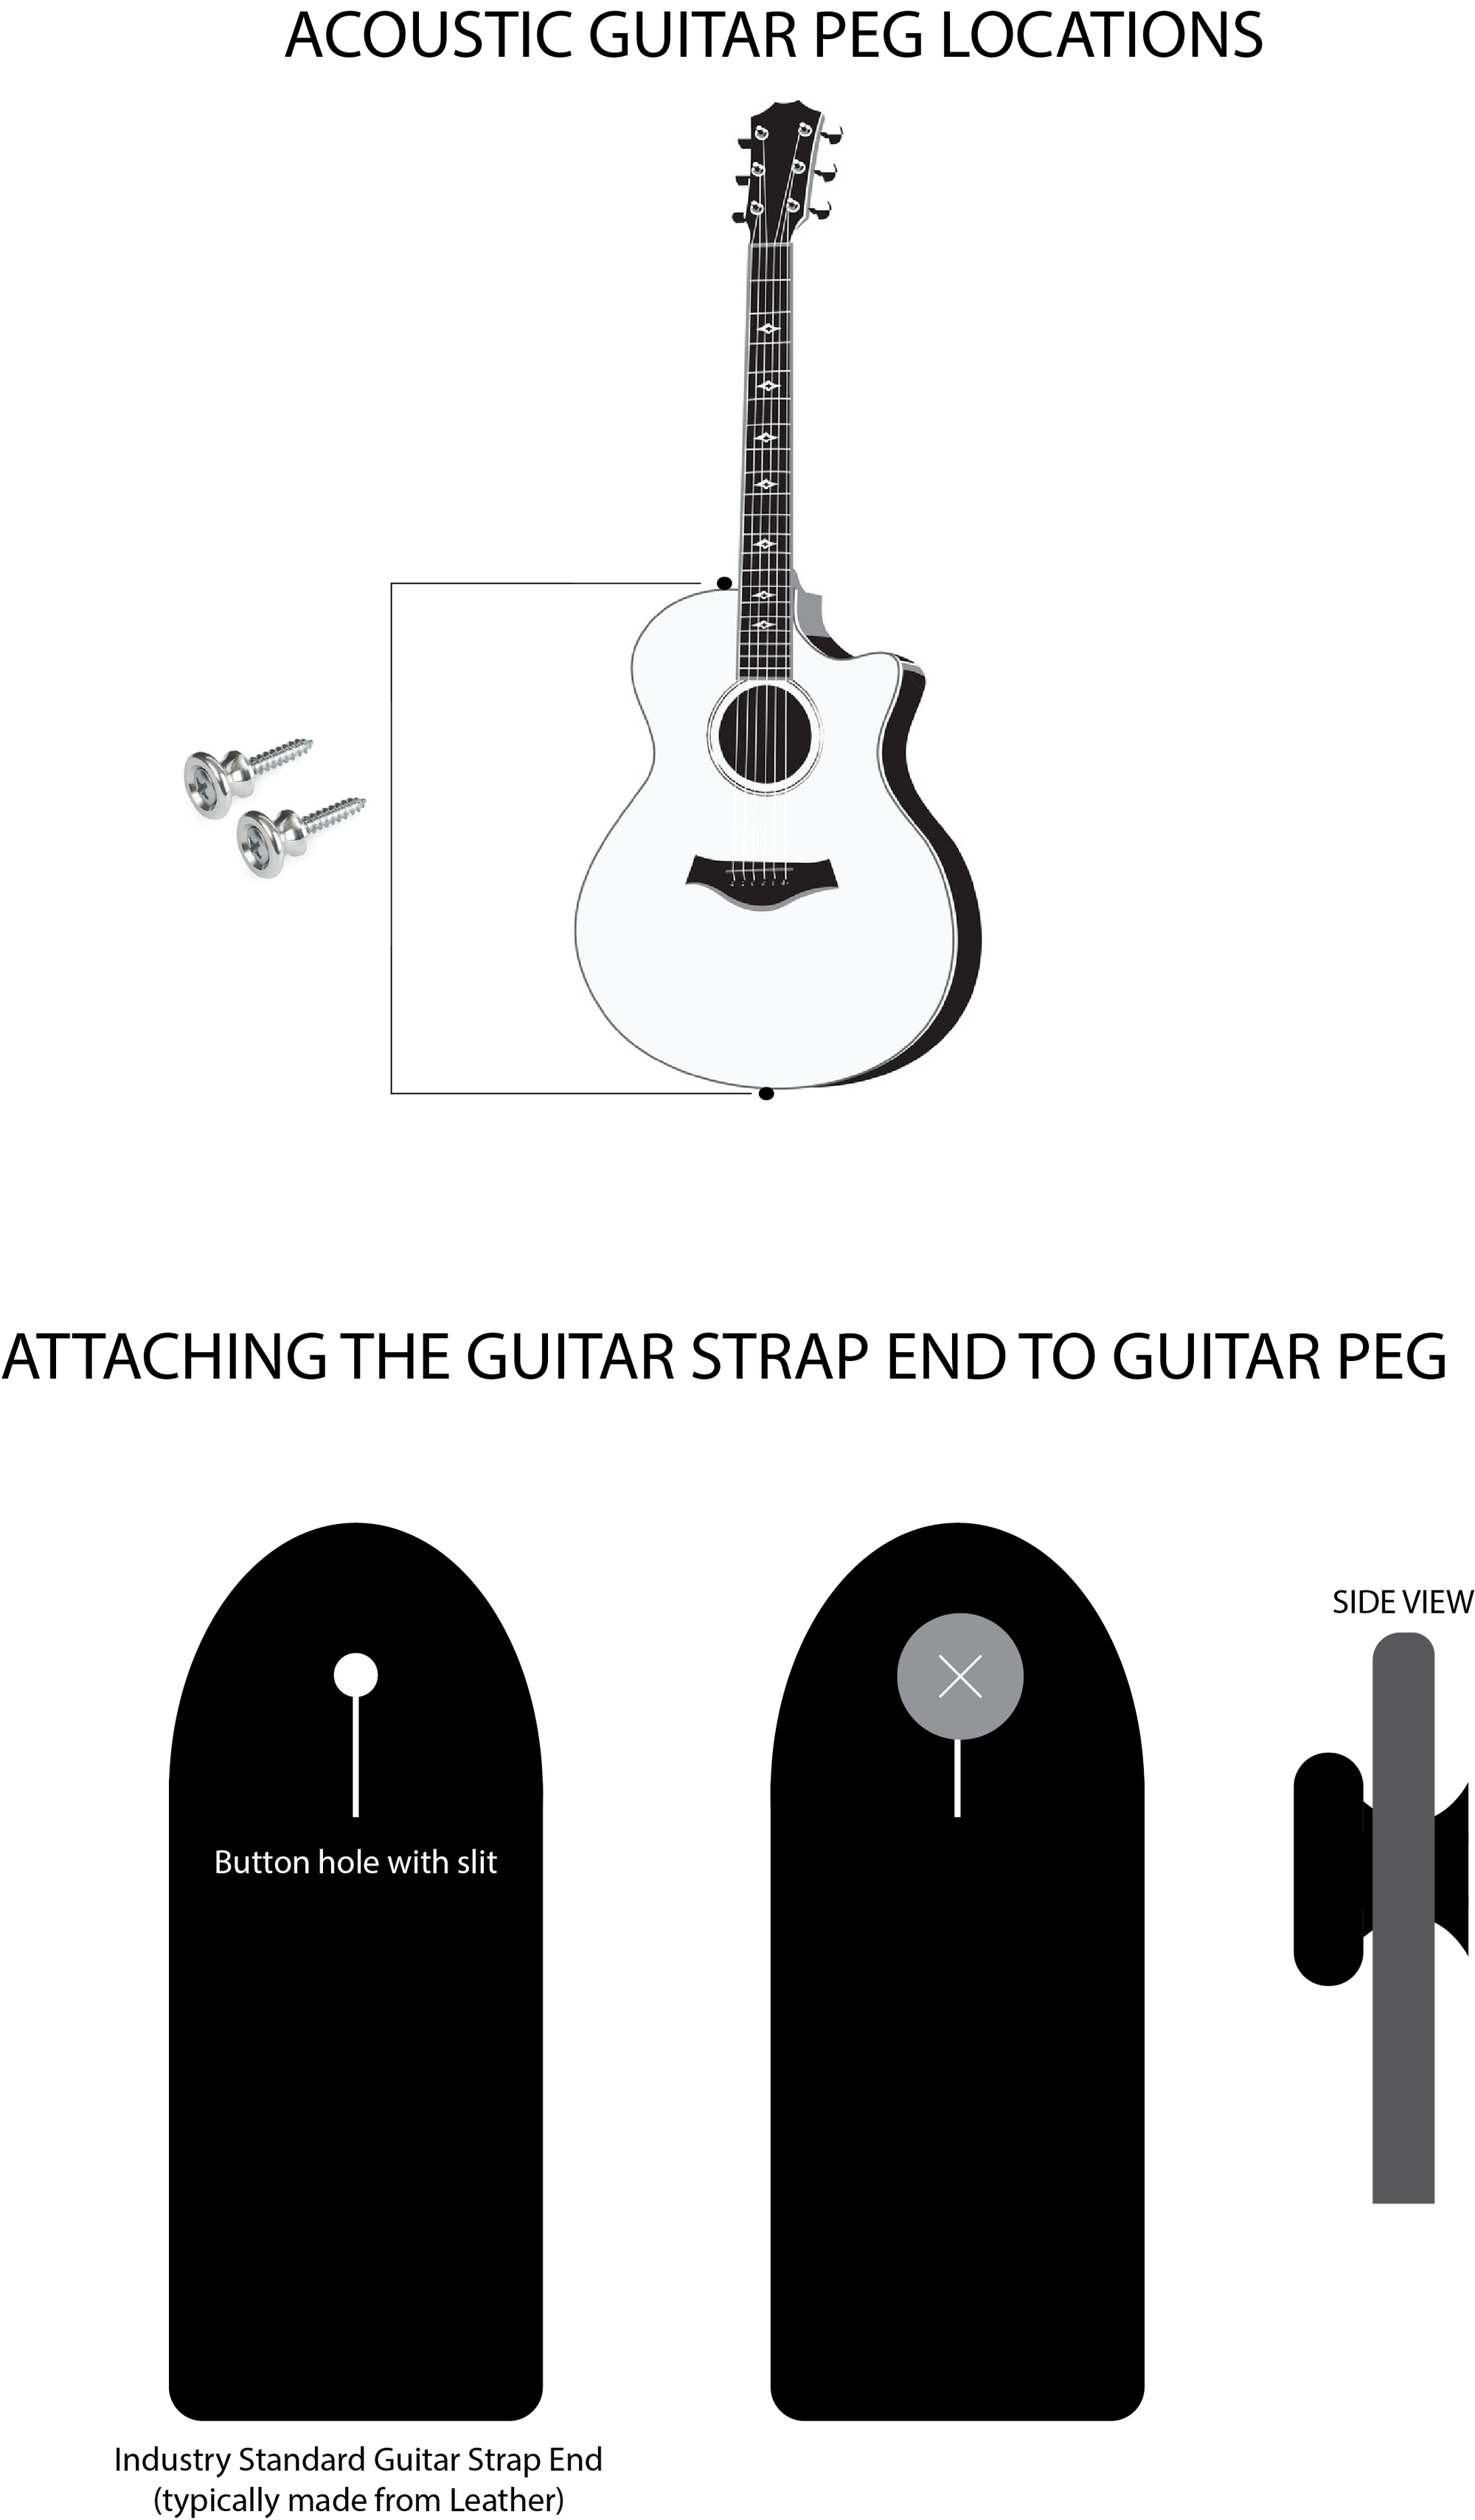 How to attach a guitar strap.